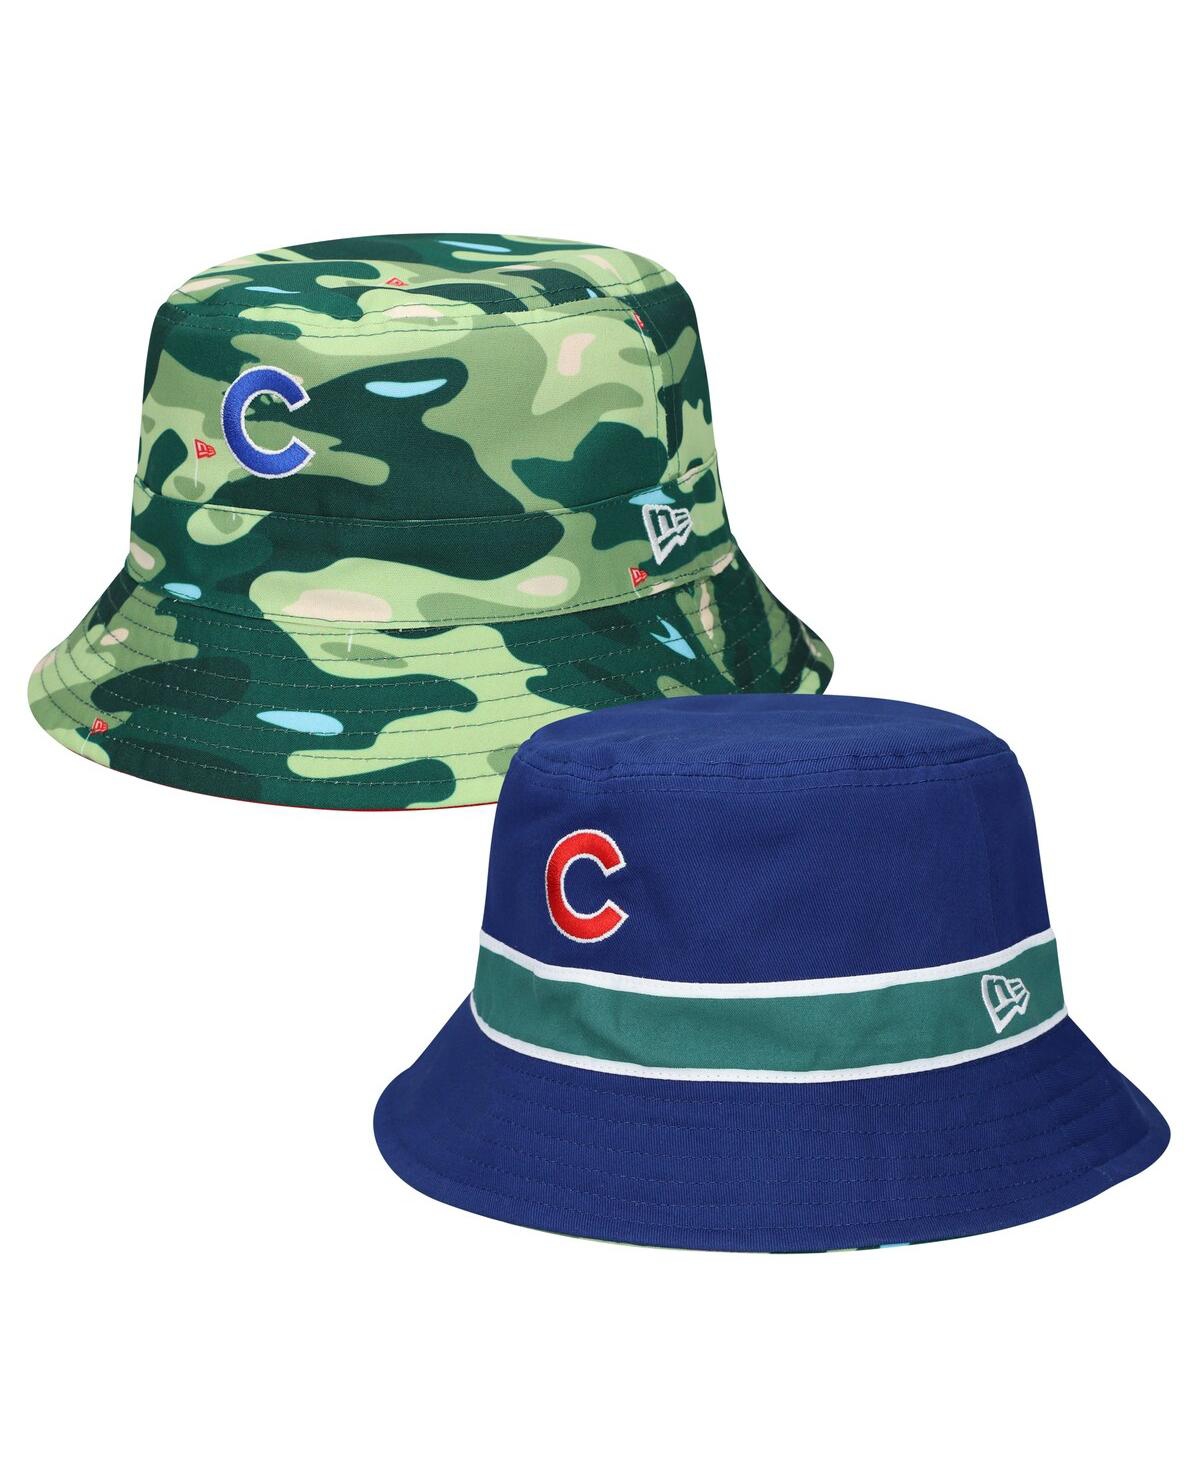 Shop New Era Men's  Royal Chicago Cubs Reverse Bucket Hat